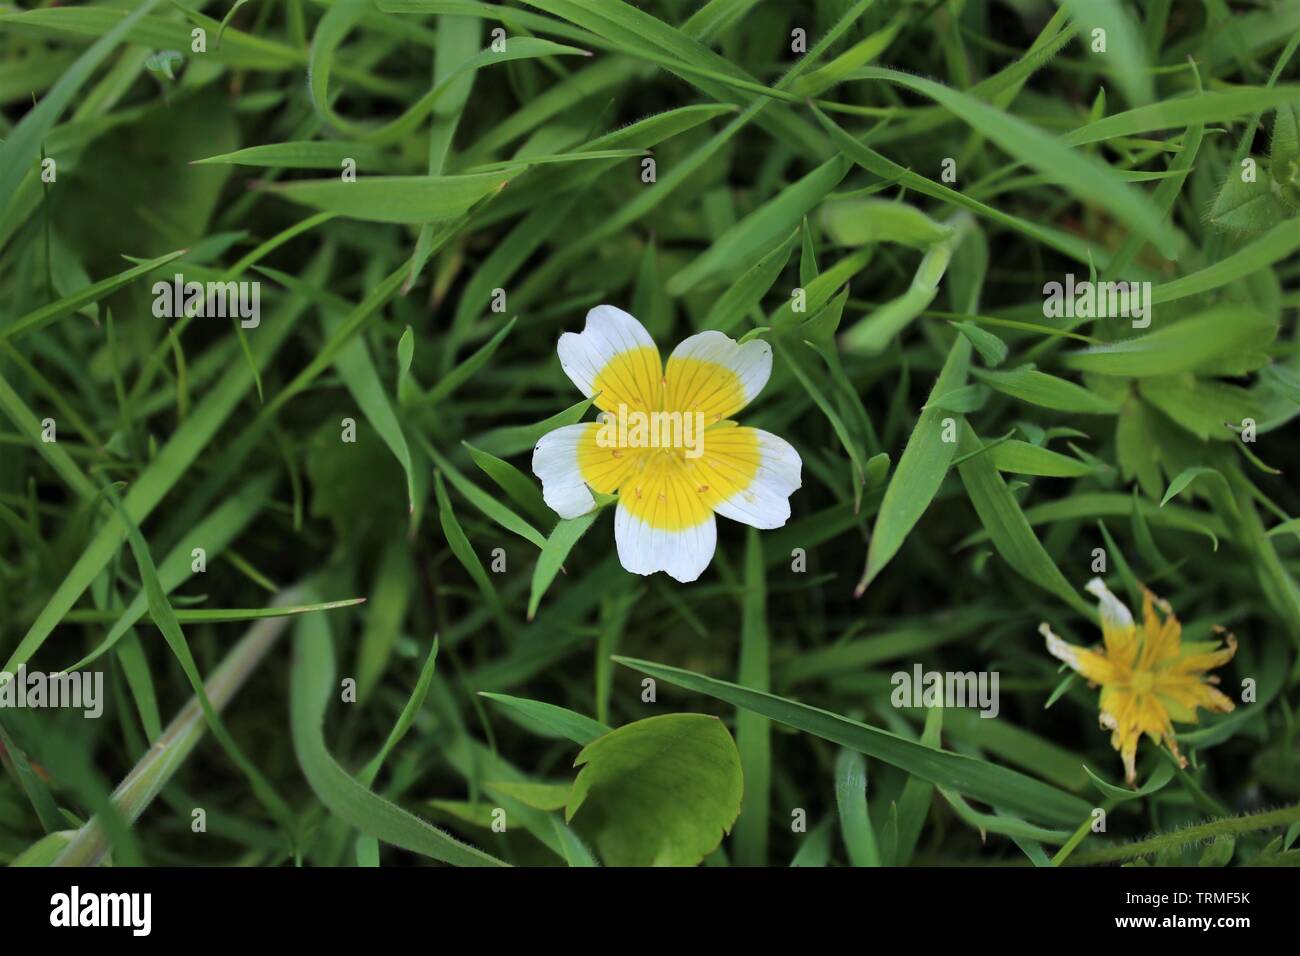 Wildflower in grass Stock Photo